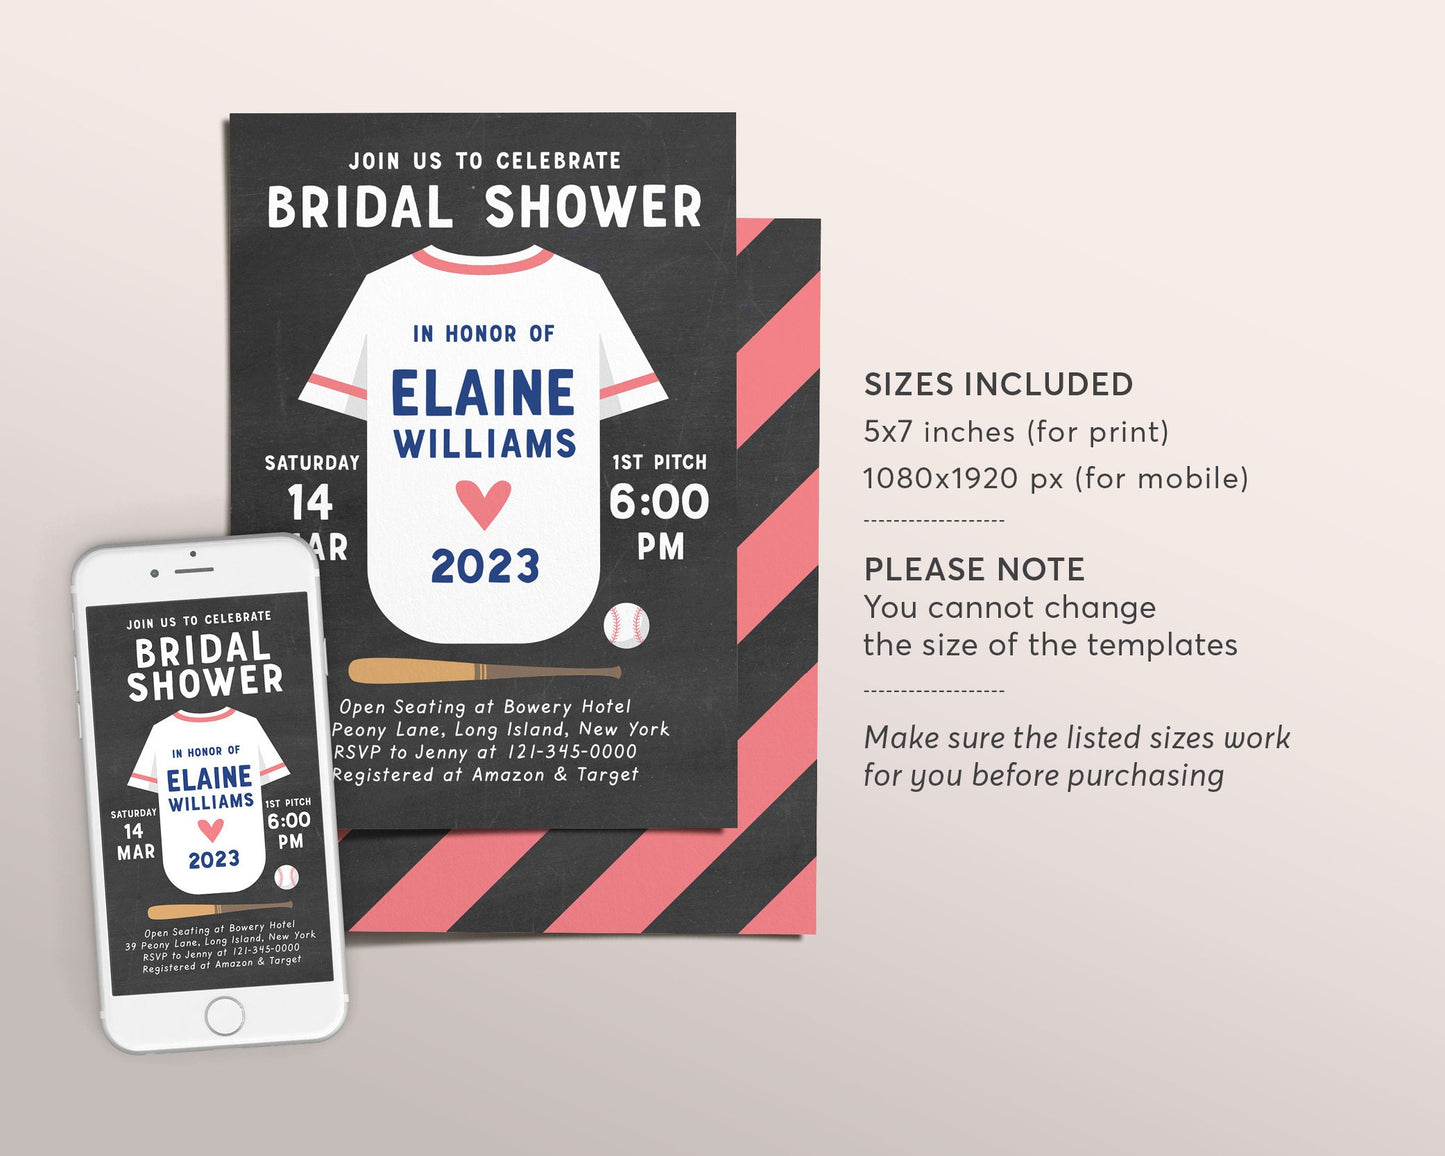 Editable Baseball Bridal Shower Invitation Template, Baseball Theme Wedding Invite, Sports Bridal Party, Baseball Tickets, Couples Shower